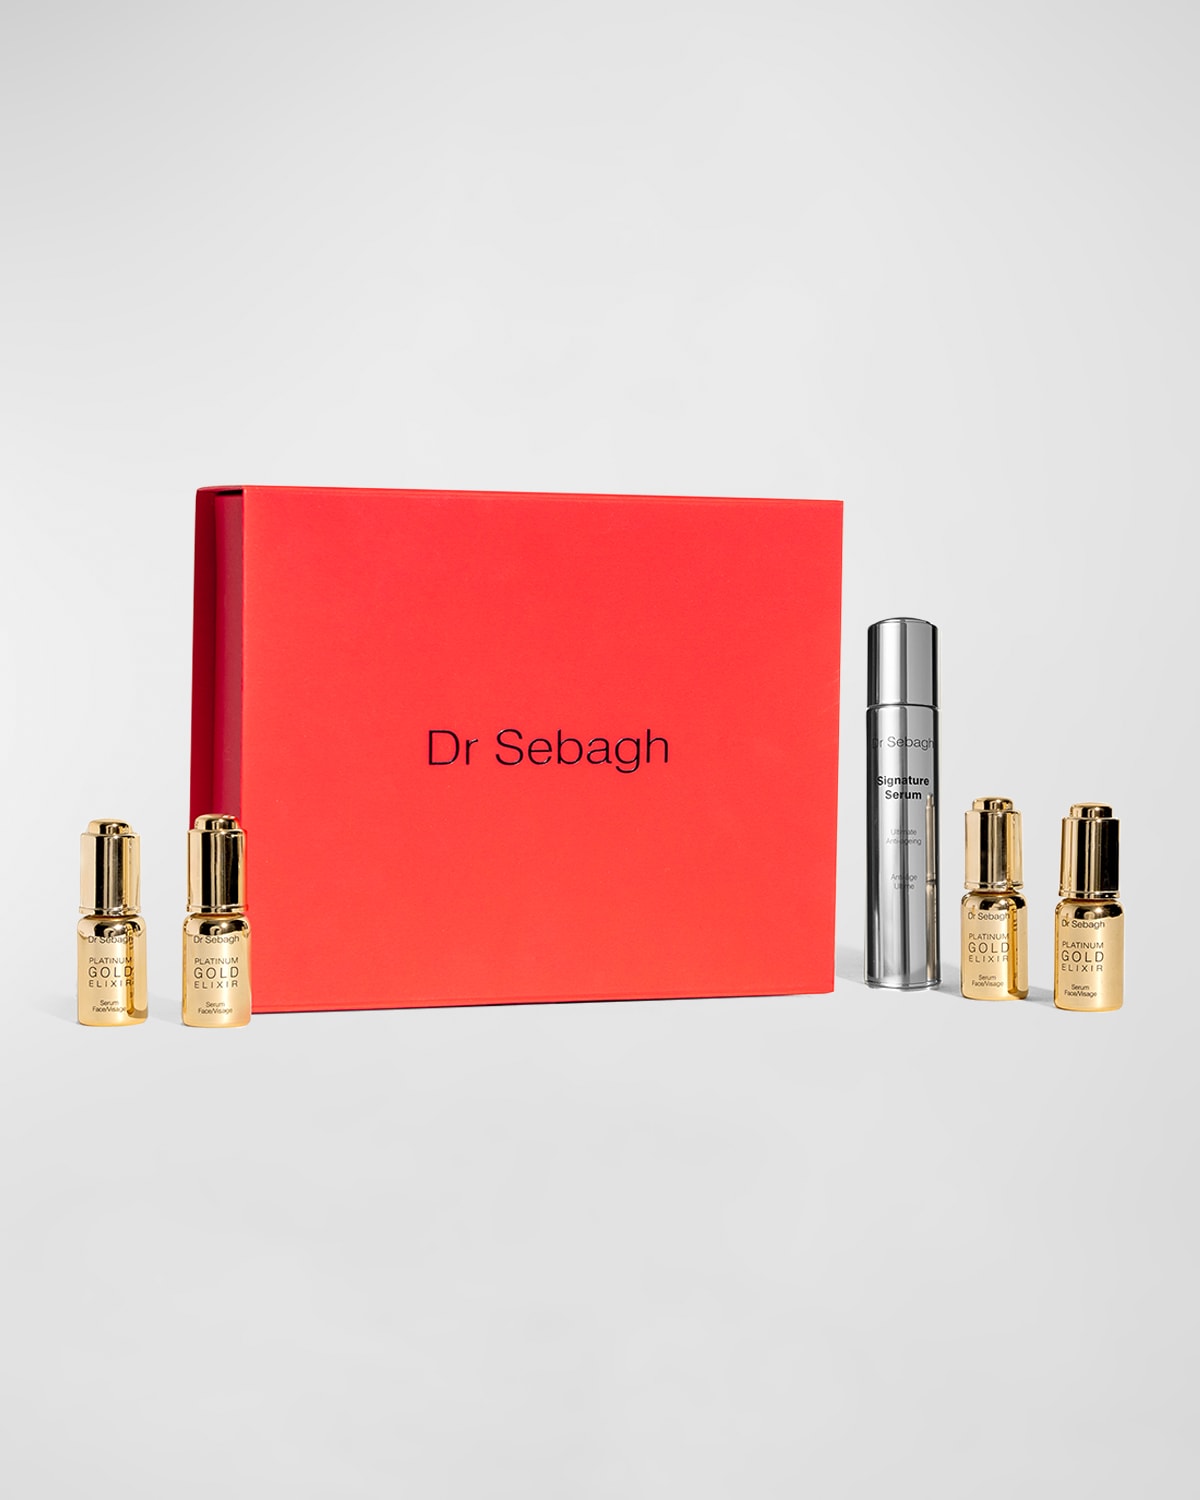 Dr Sebagh Signature Gold Box ($1,218 Value)